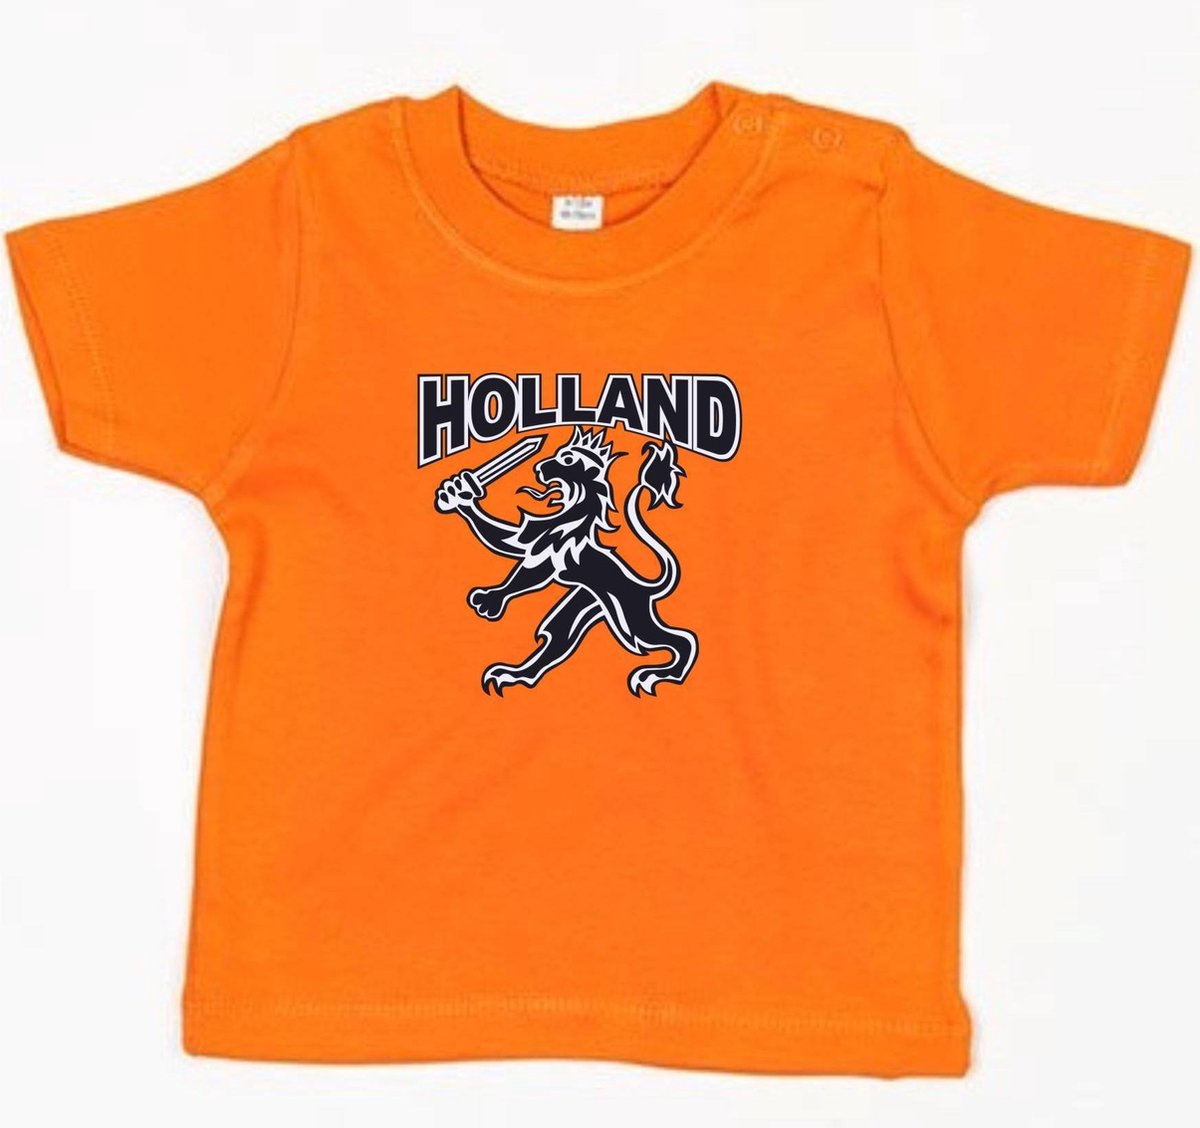 T-shirt oranje Holland met leeuw baby | WK Voetbal Qatar 2022 | Nederlands elftal babyshirt | Nederland supporter | Holland souvenir | Maat 92